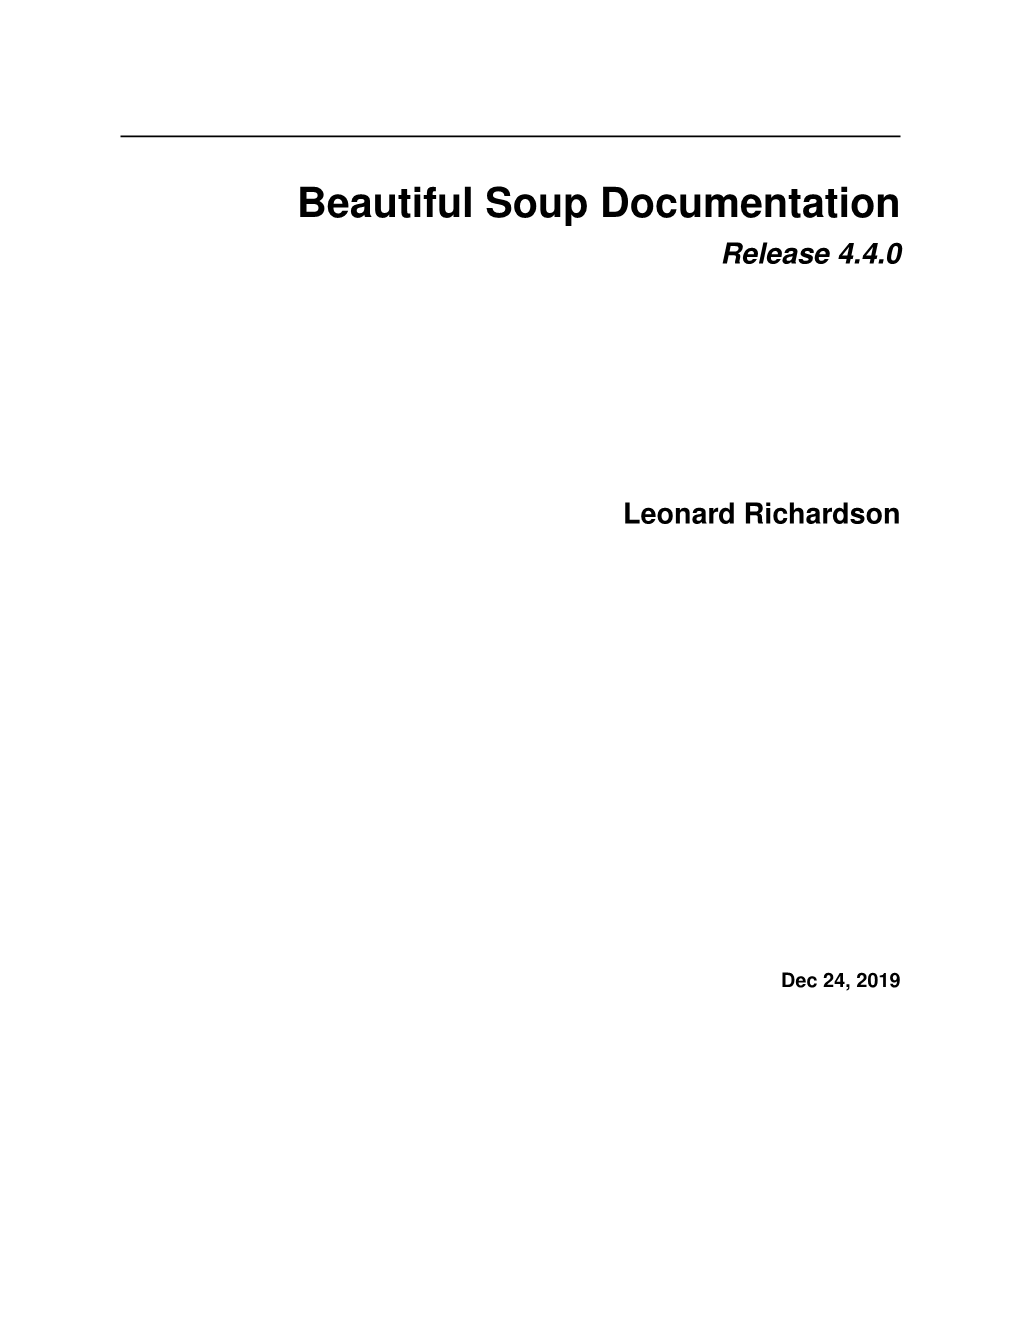 Beautiful Soup Documentation Release 4.4.0